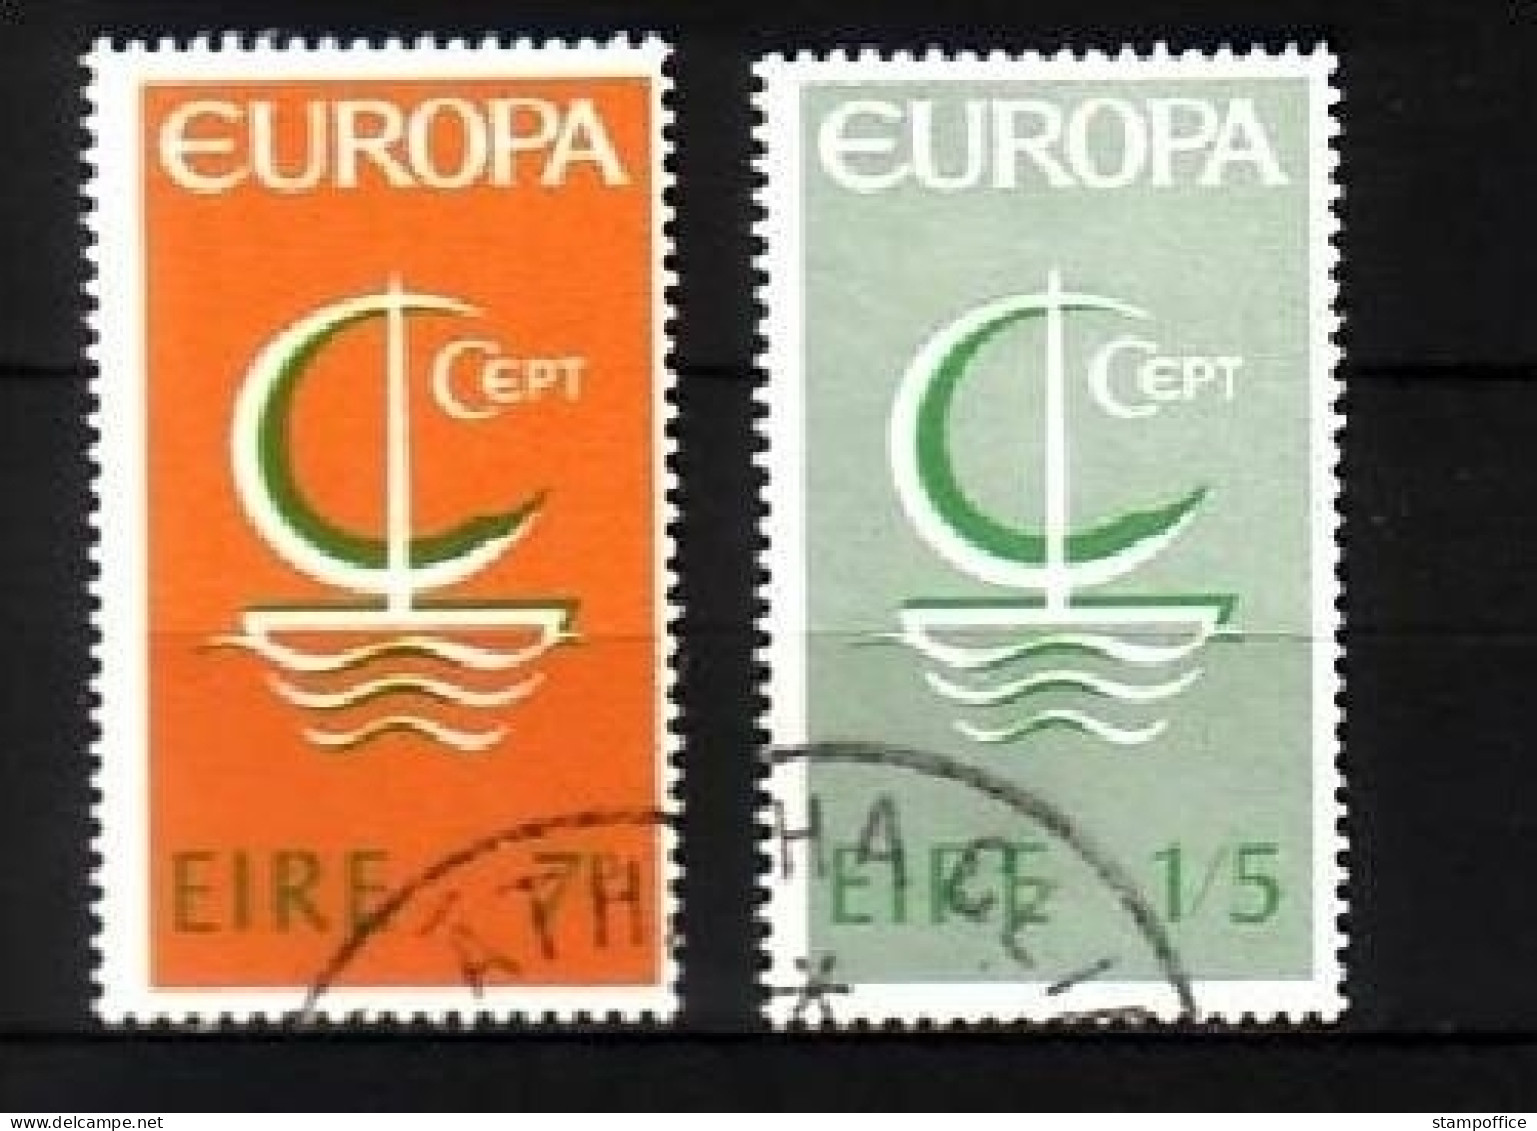 IRLAND MI-NR. 188-189 O EUROPA 1966 - SEGEL - 1966